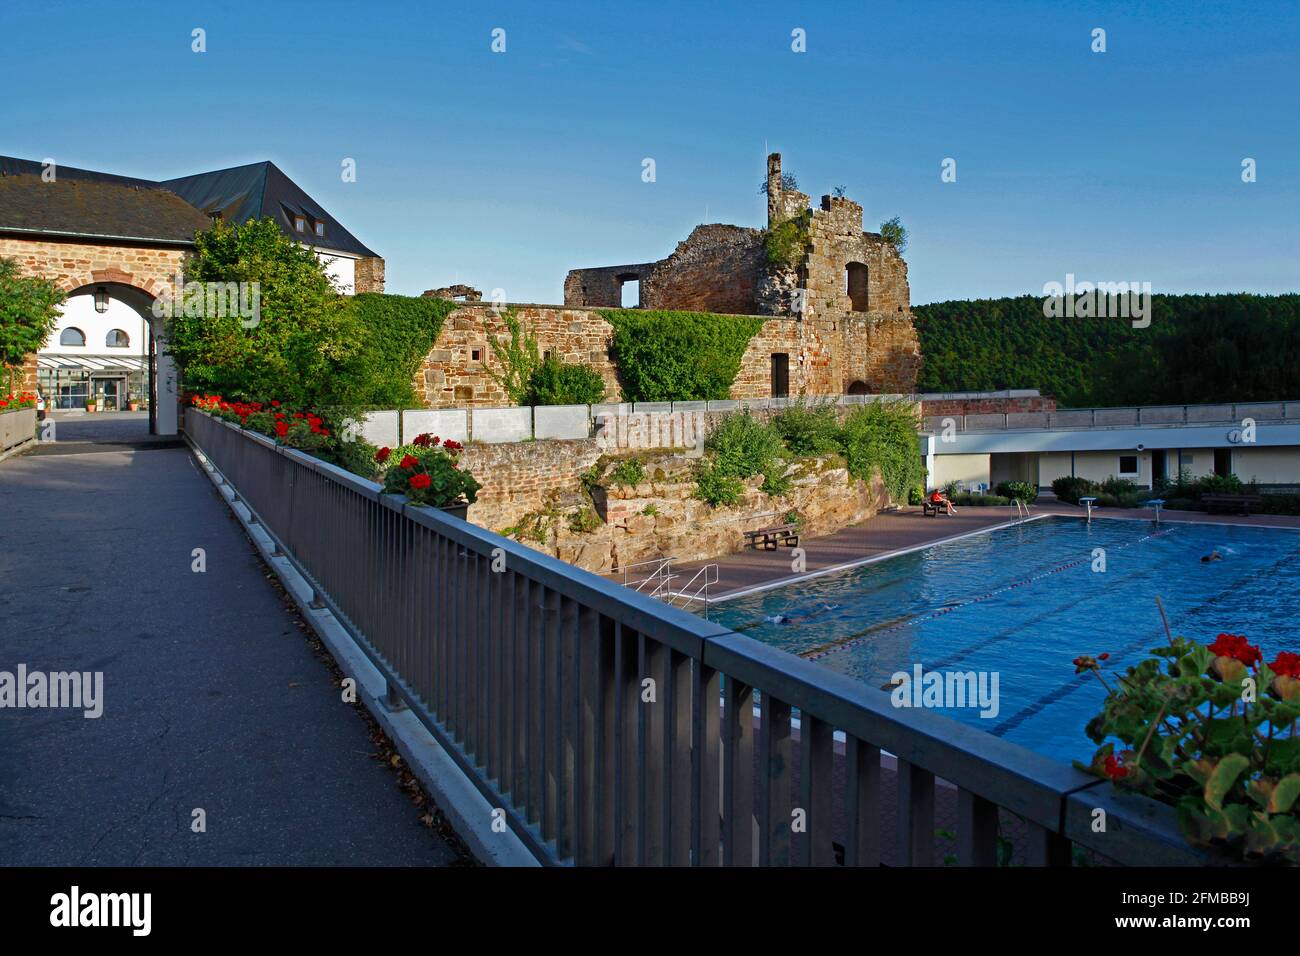 Altleiningen Castle, youth hostel, heated outdoor pool, Castle Festival, Altleiningen, district. Bad Dürkheim, Rhineland-Palatinate, Germany Stock Photo